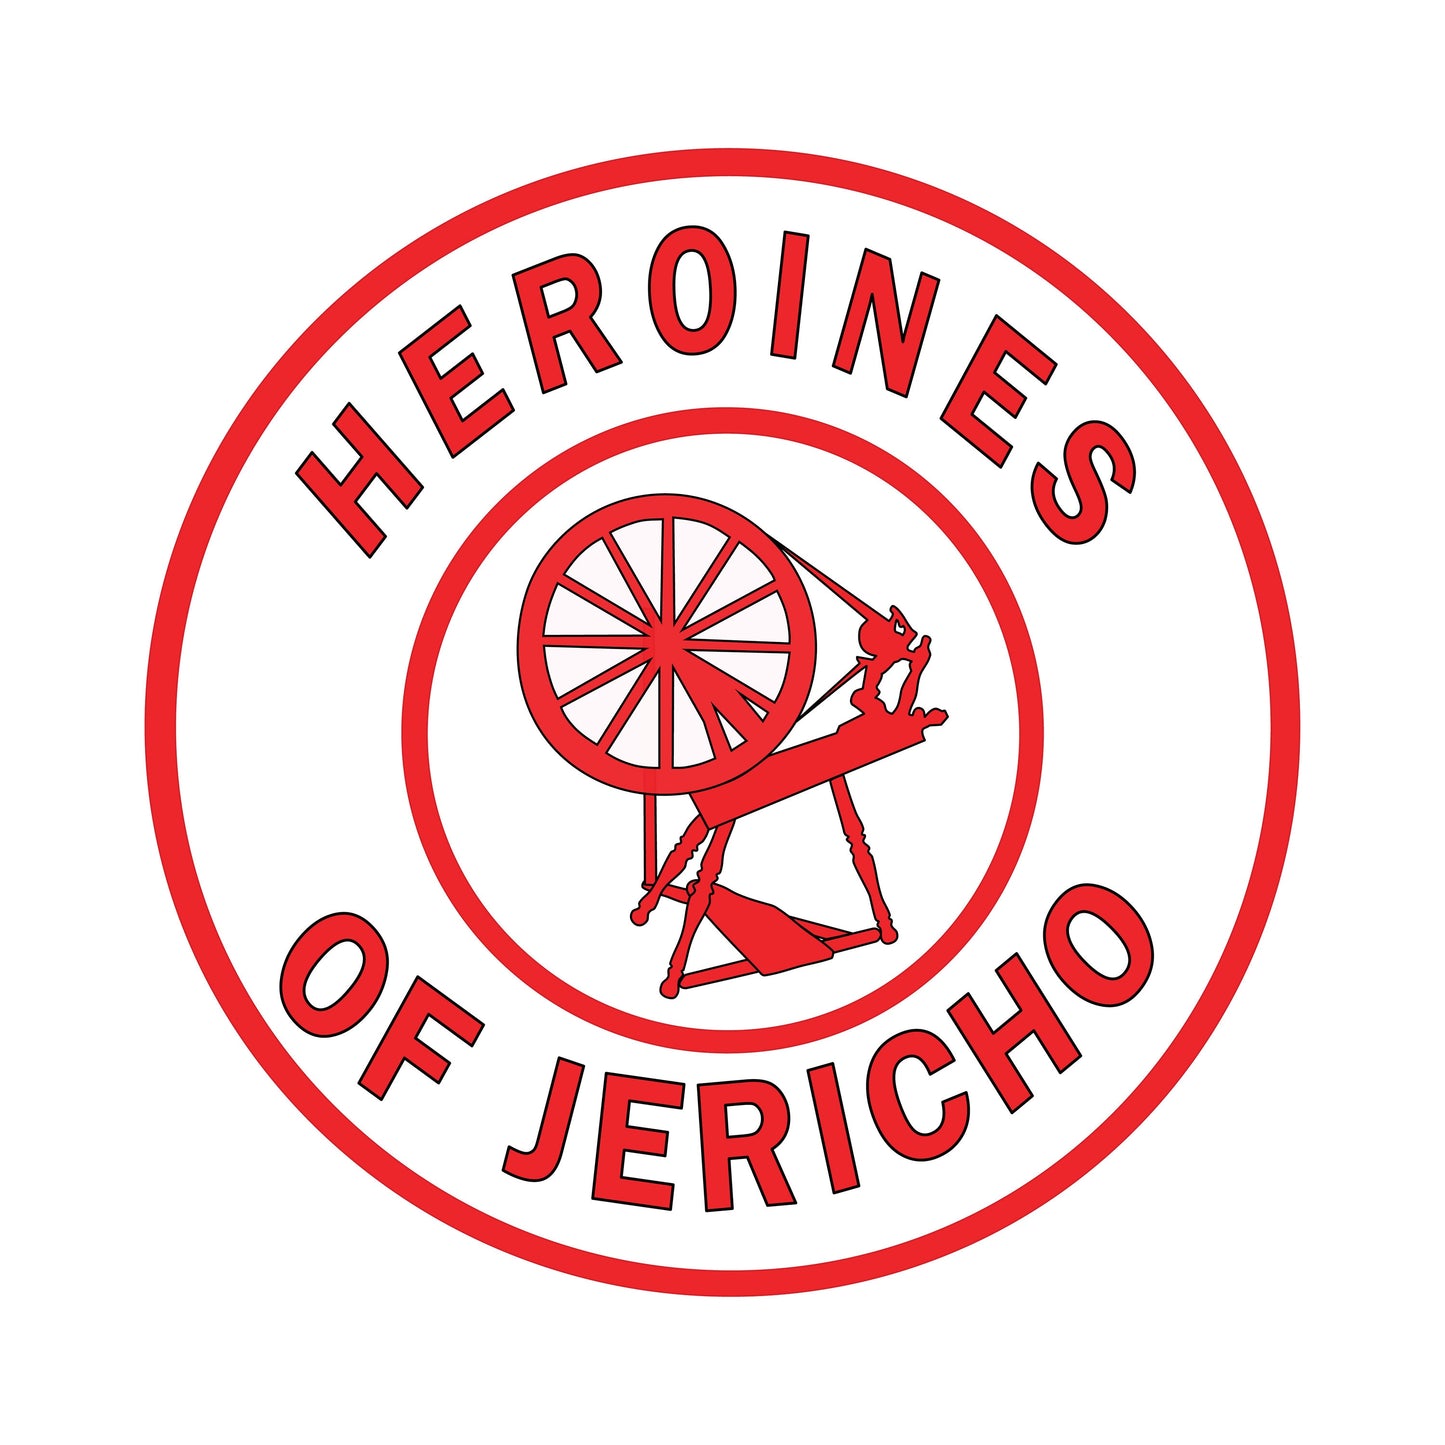 Heroines of Jericho HOJ Large Tote bag with logo both wheel design.